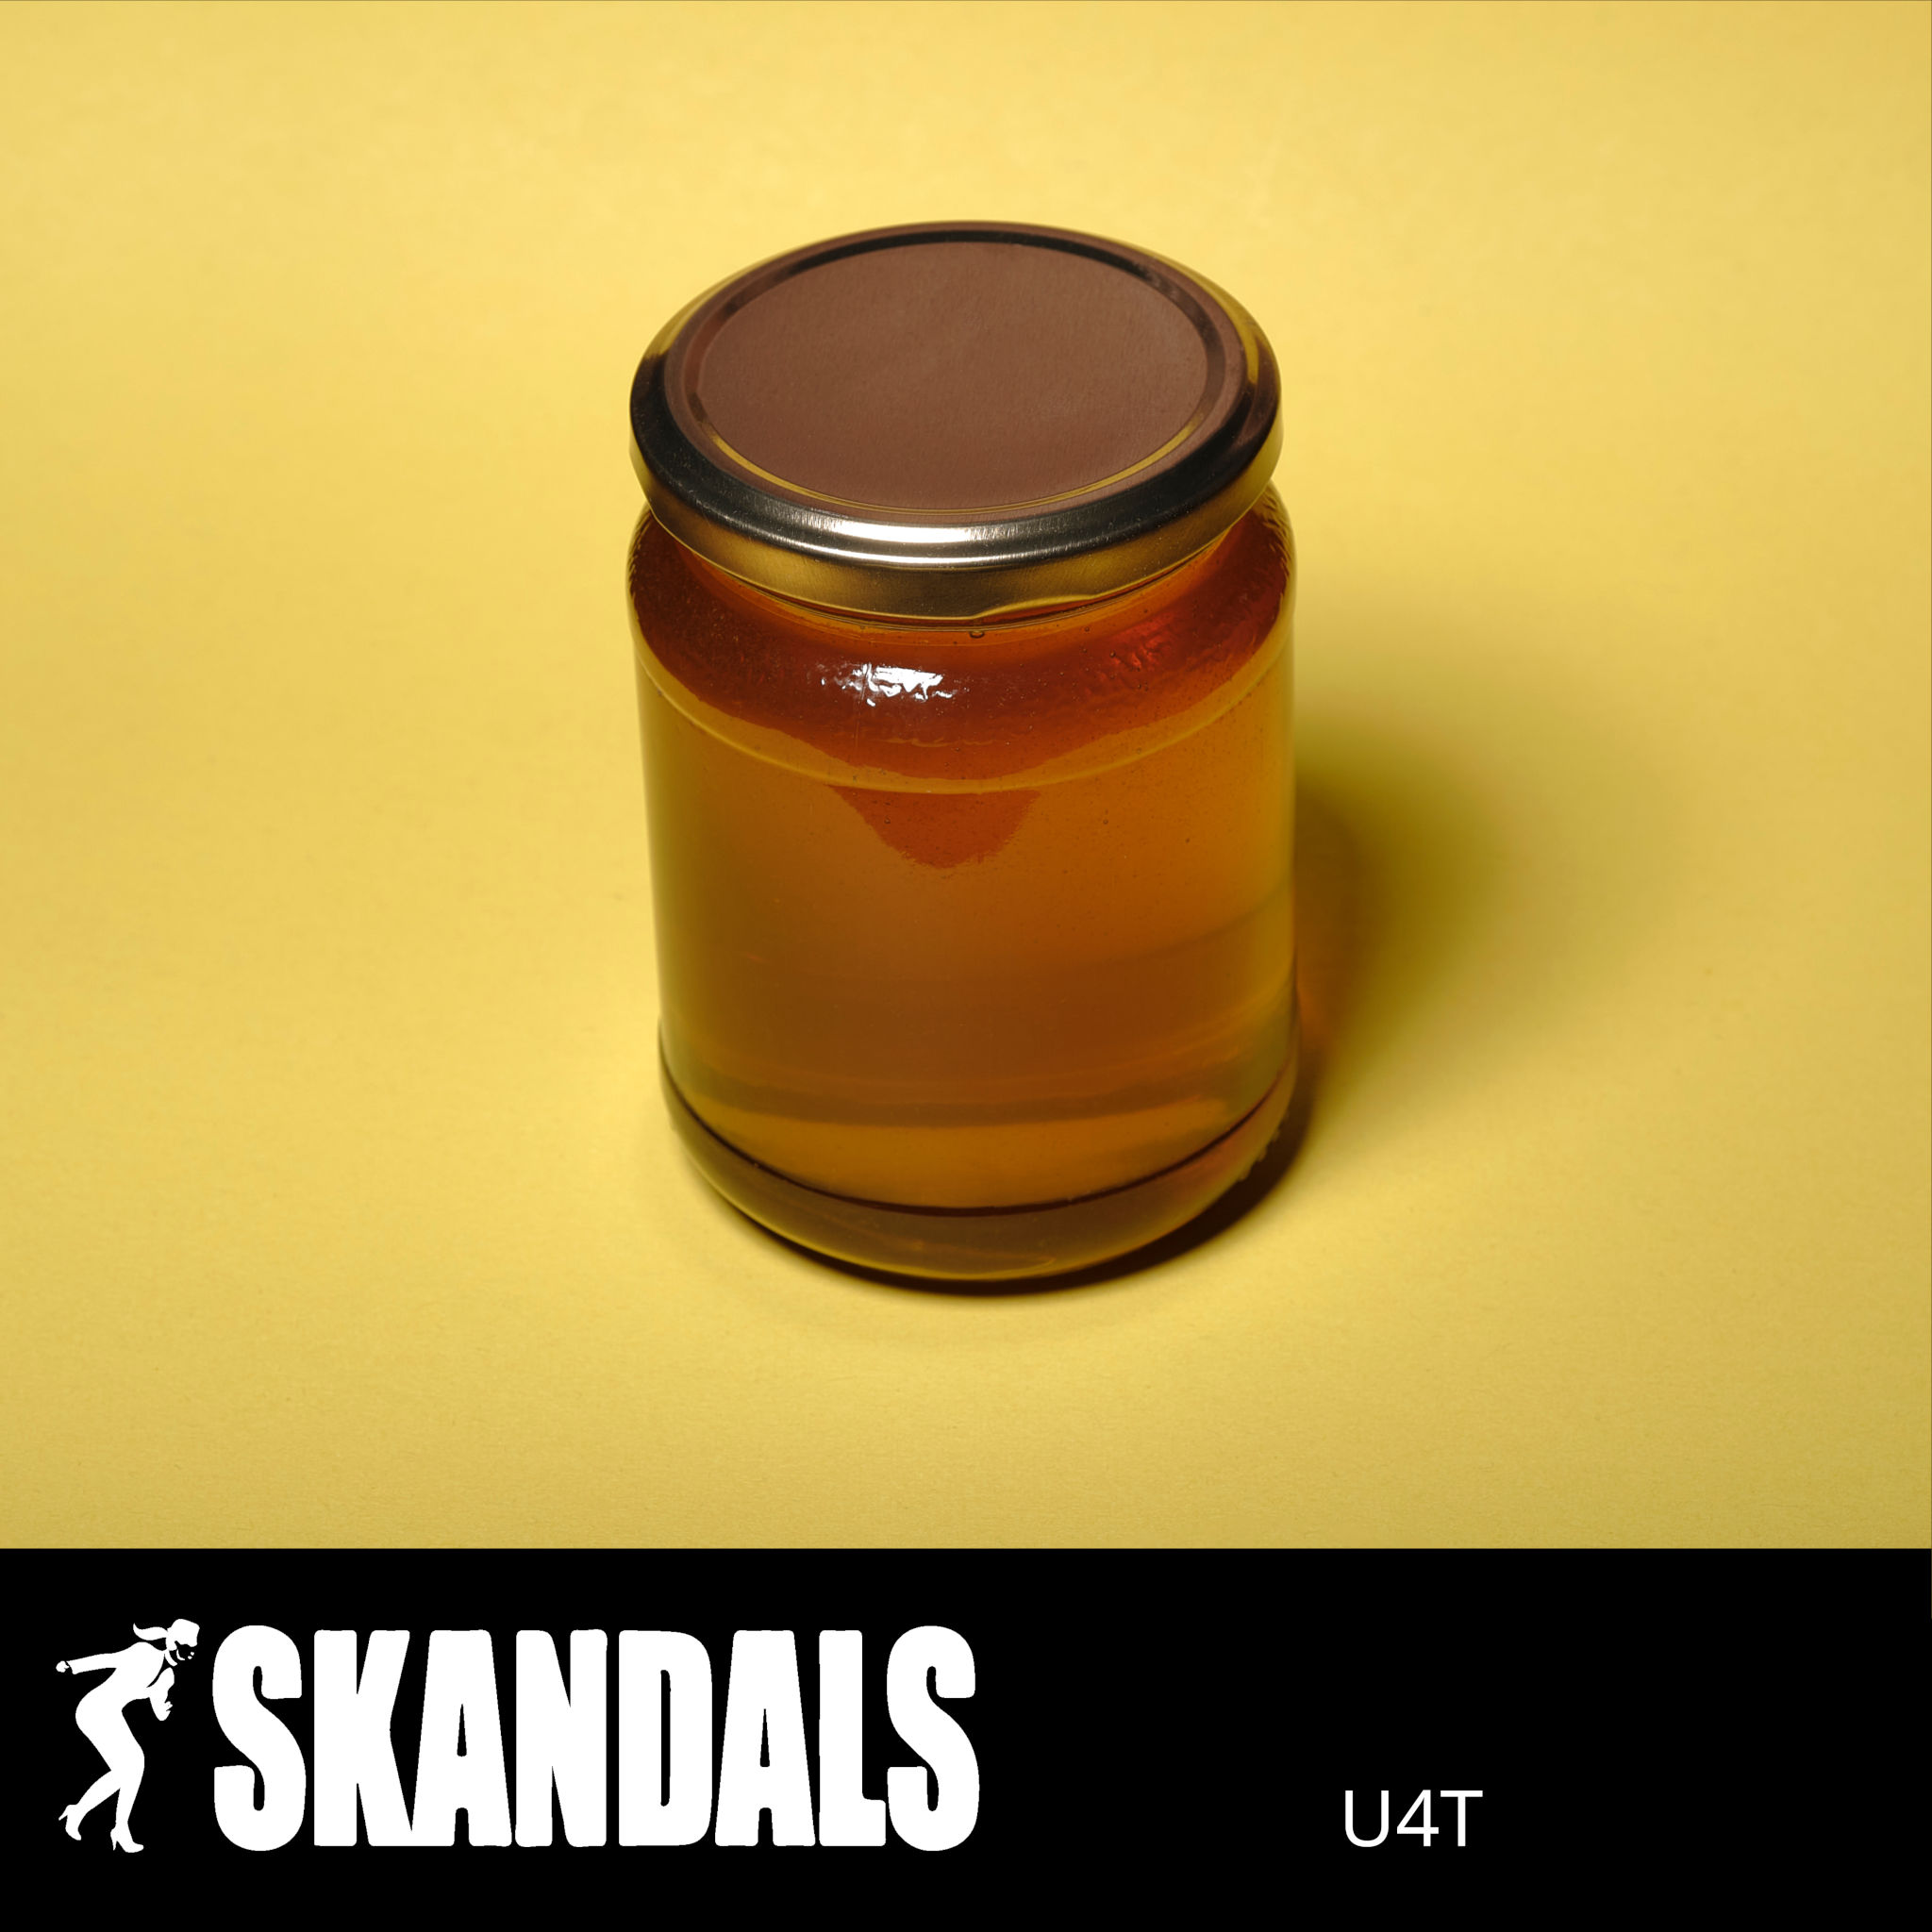 Skandals U4T cover showing jar of honey